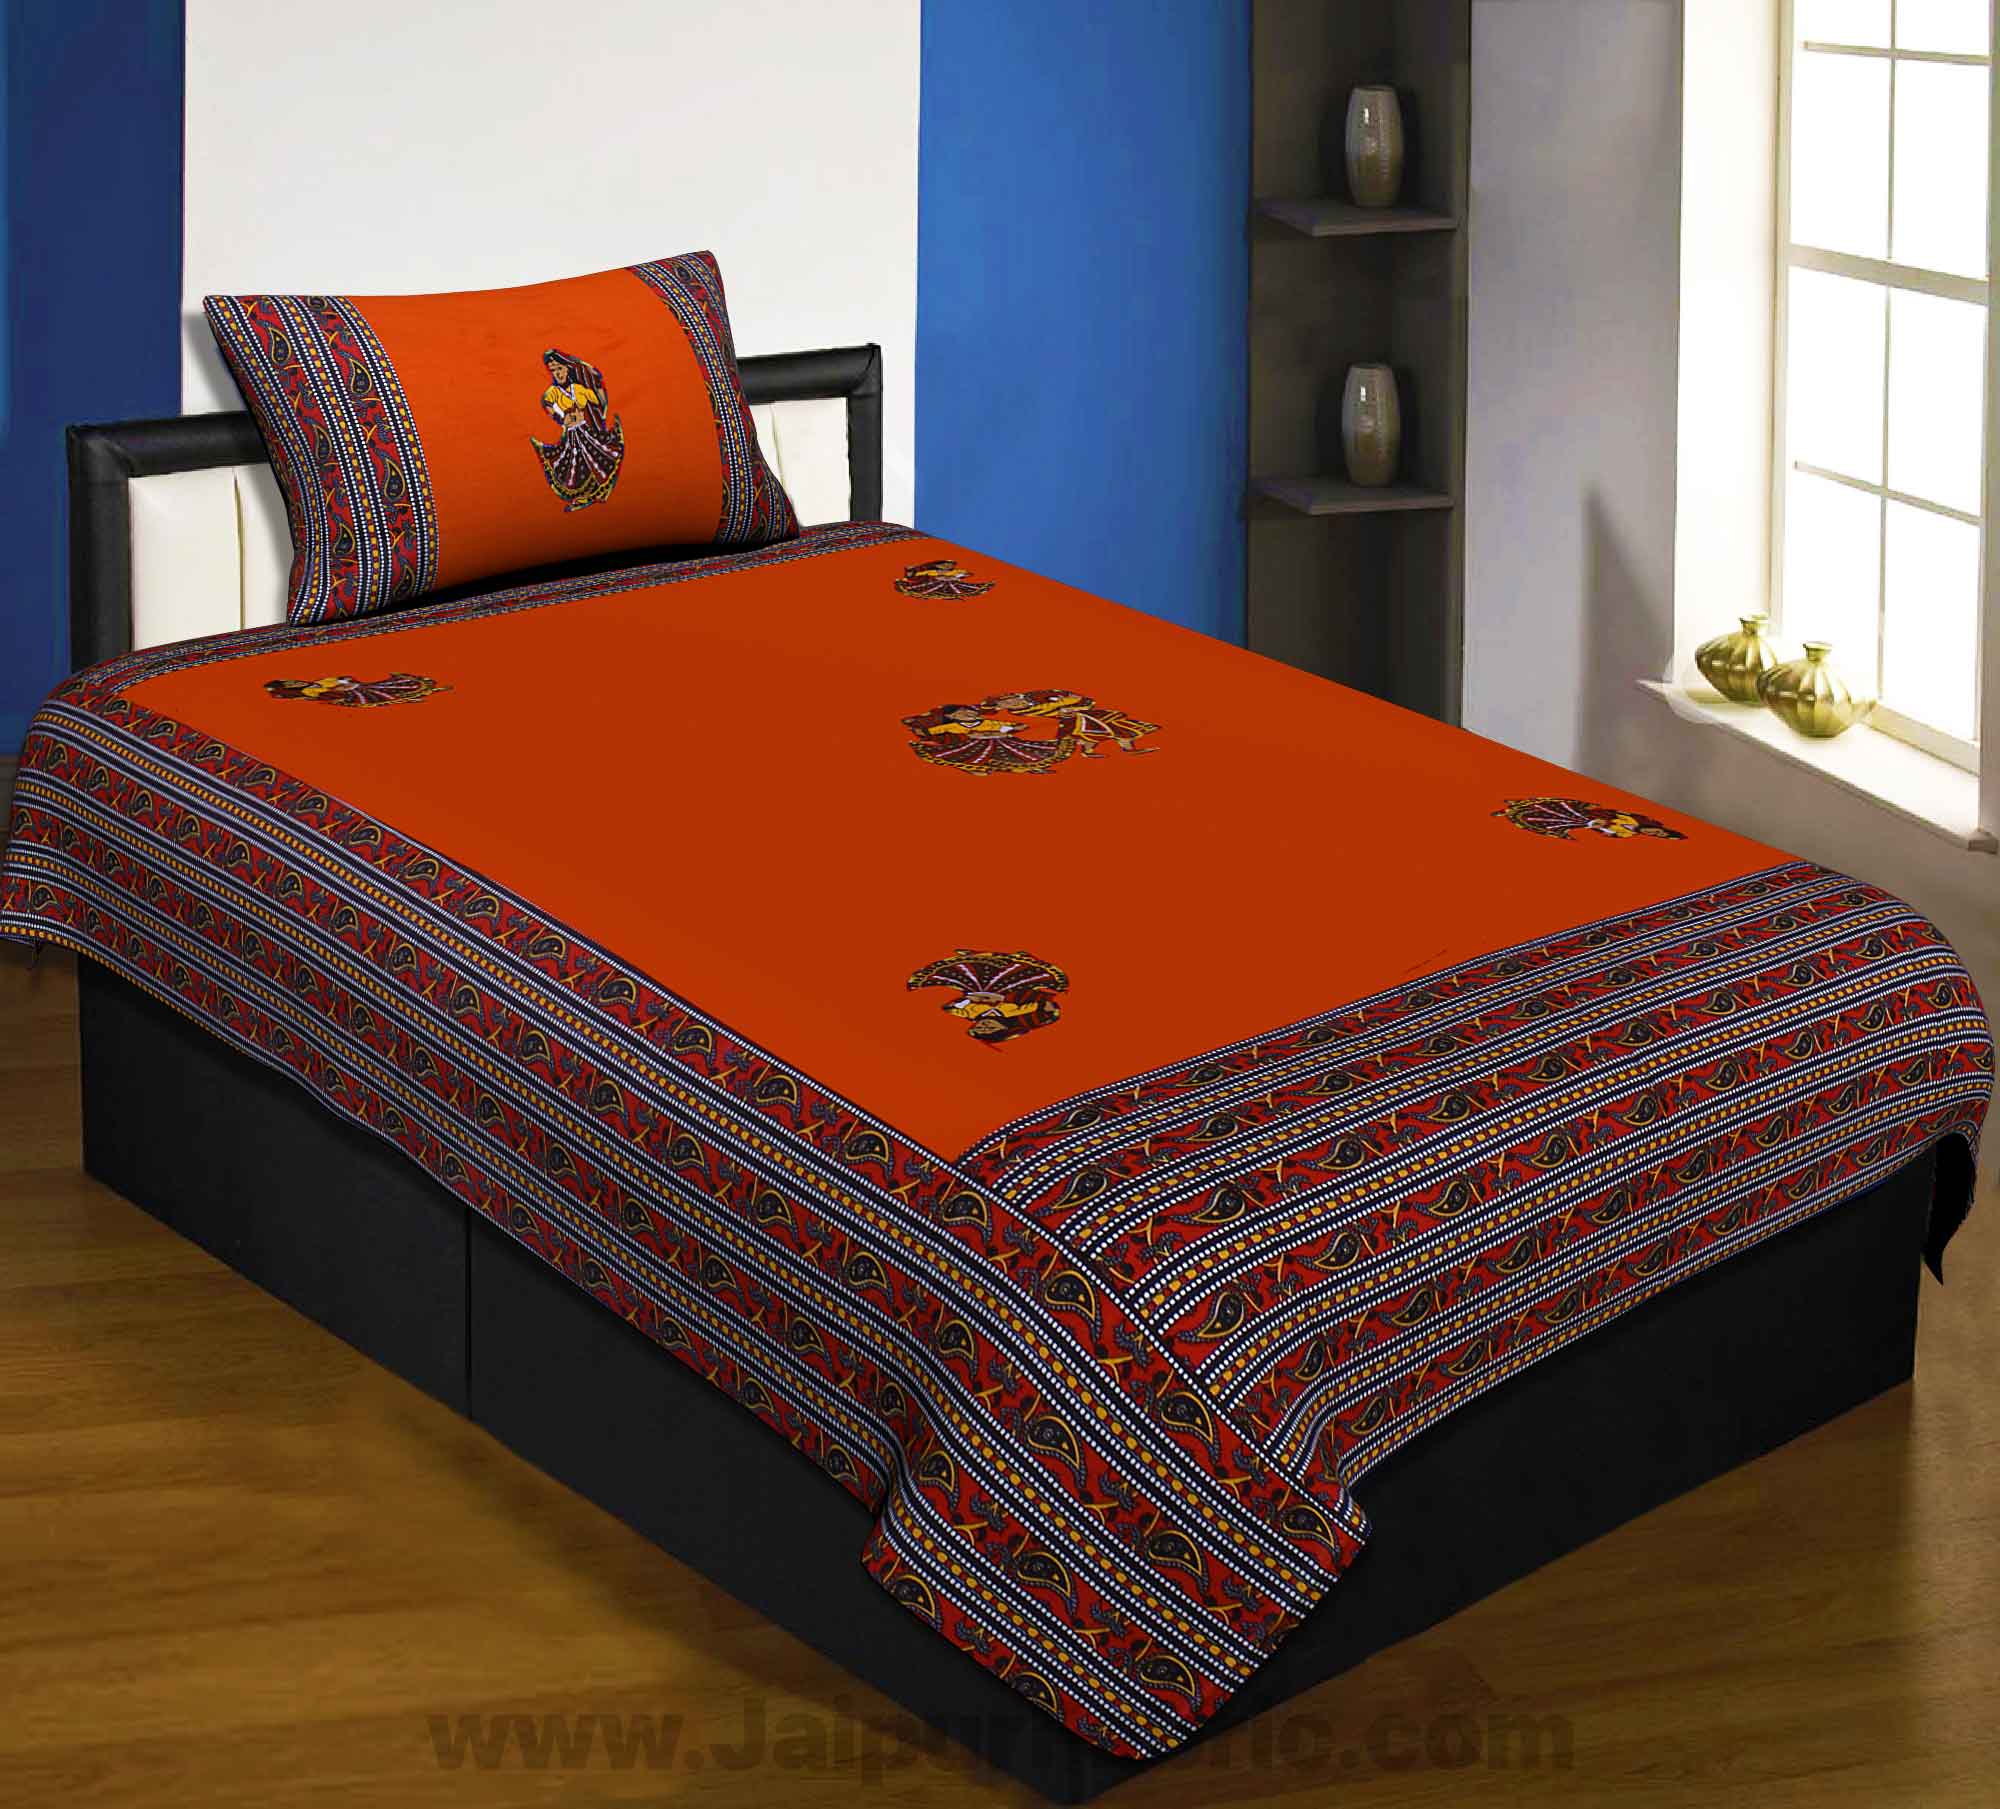 Applique Orange Rajasthani Dance Jaipuri  Hand Made Embroidery Patch Work Single Bedsheet